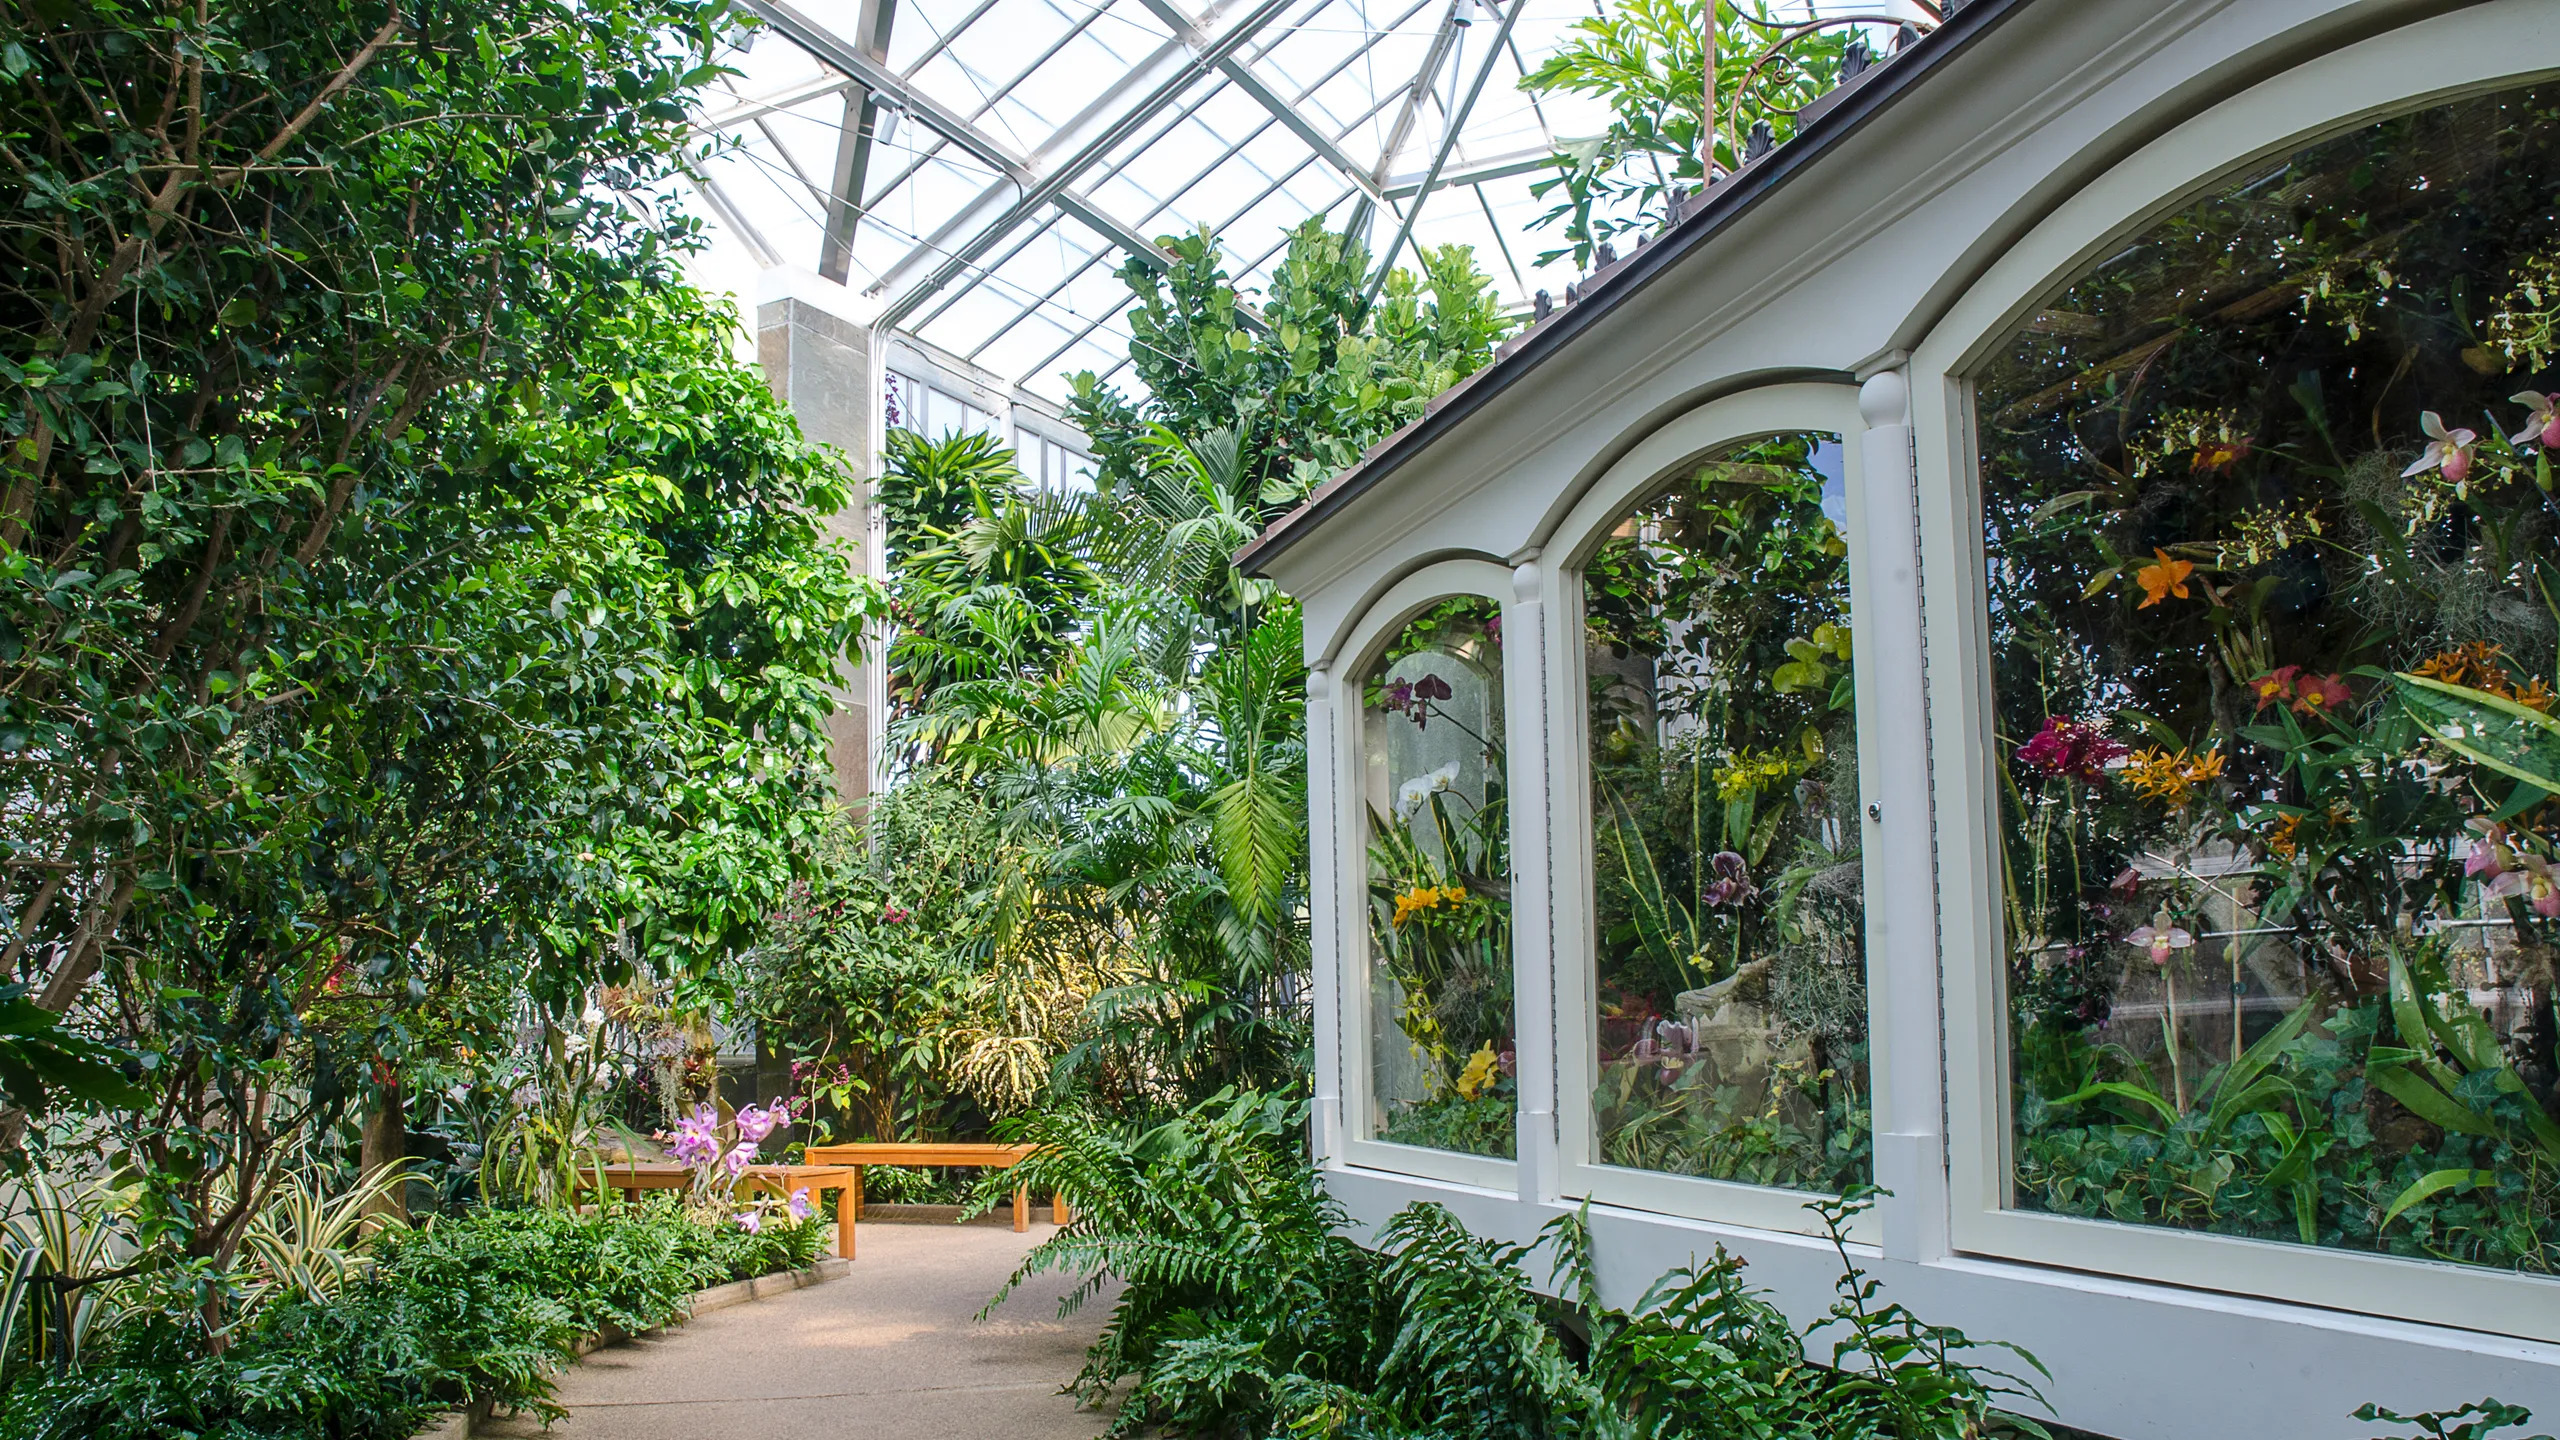 Daniel Stowe Botanical Garden in Belmont NC